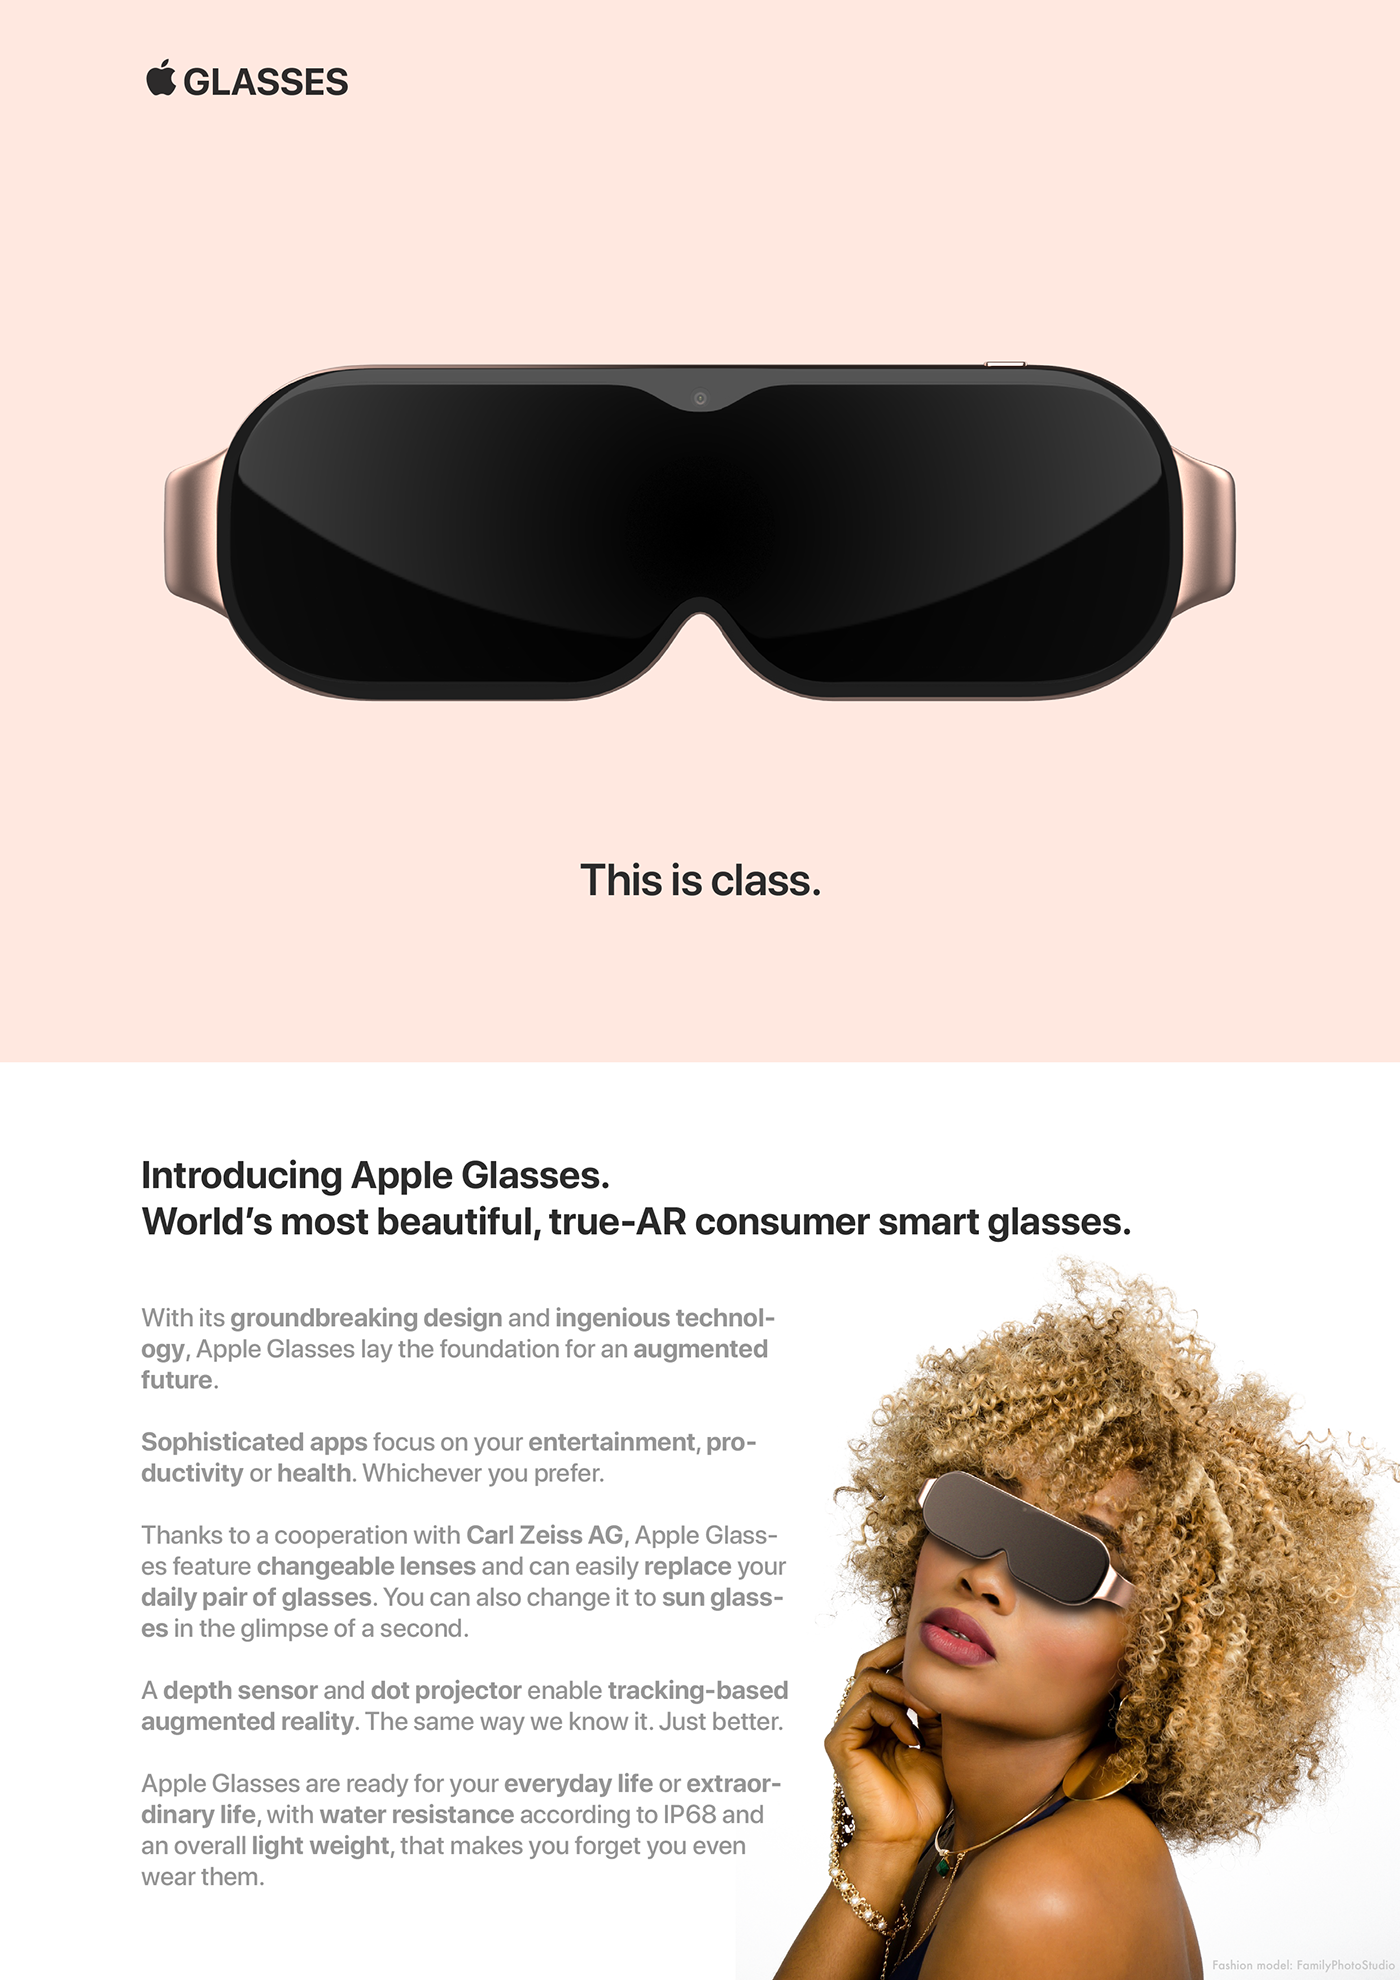 Glasses & Concept on Behance